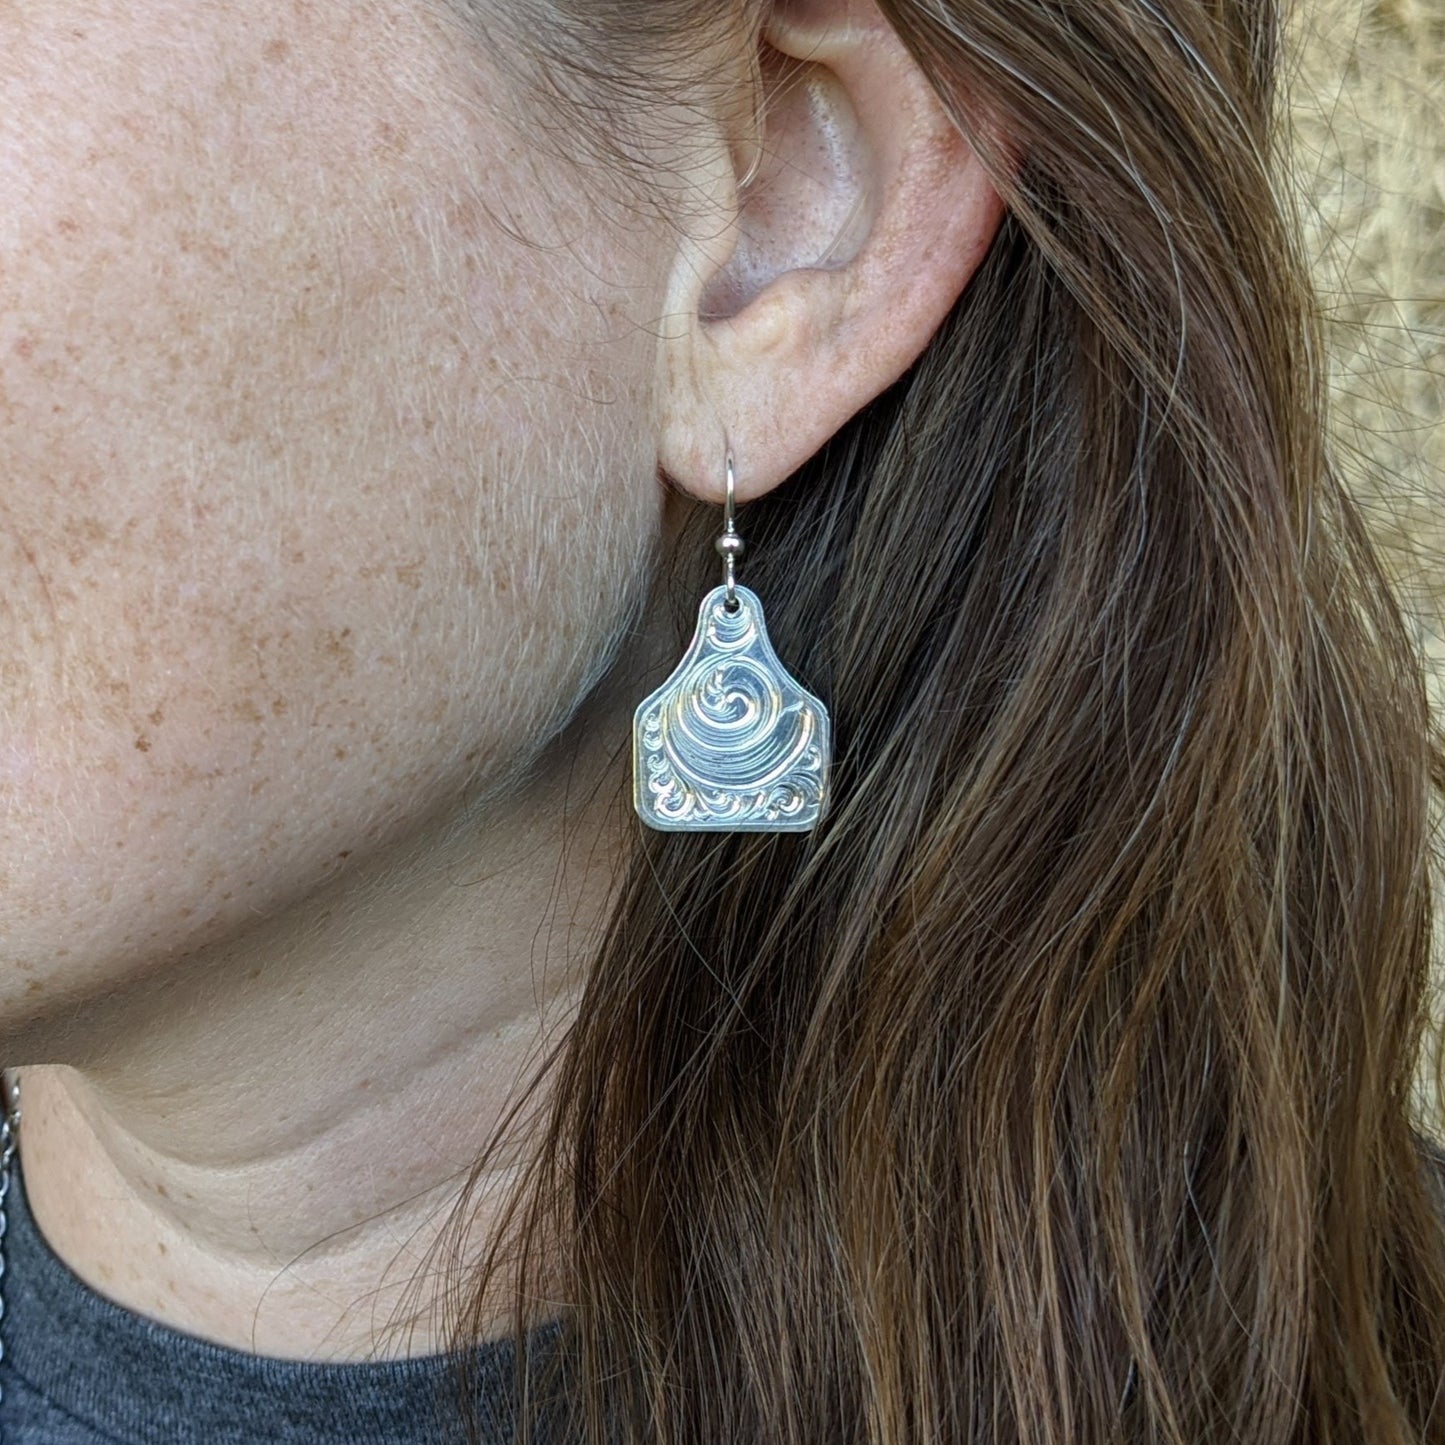 Sterling Silver Engraved Cow Tag Earrings, Western Earring Design EAR00003 by Loreena Rose